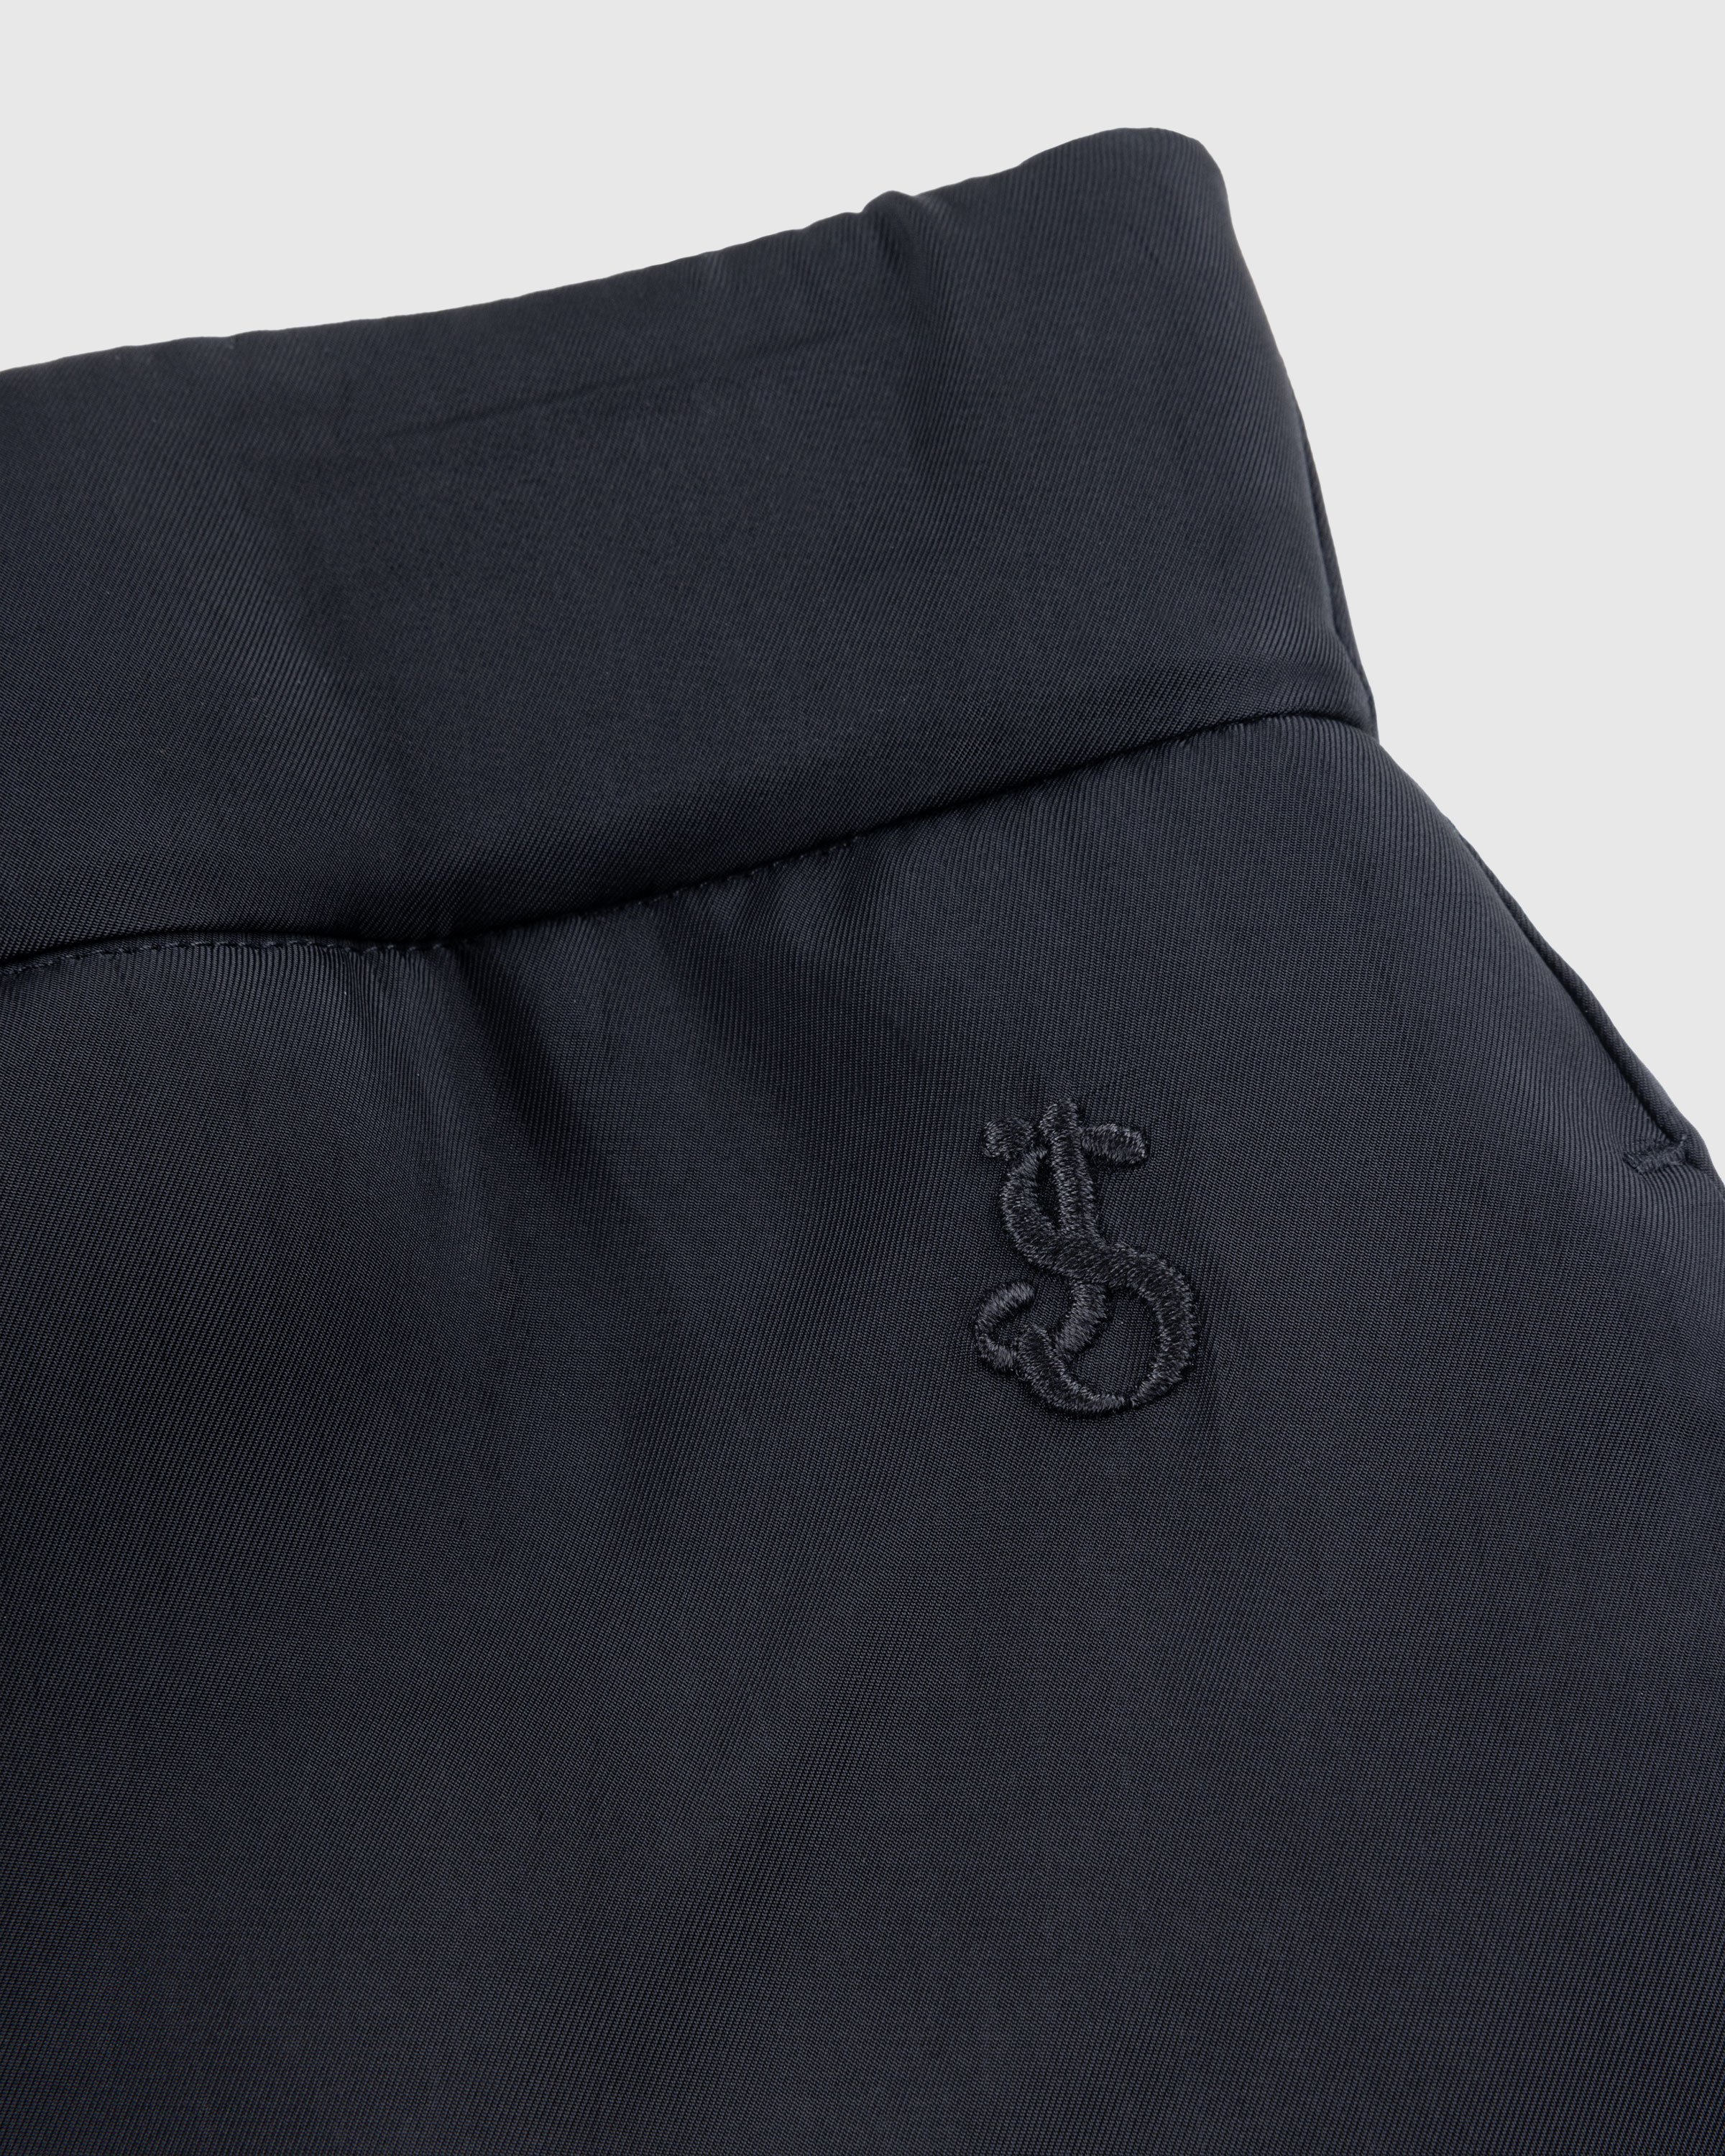 Jil Sander - Shorts - Clothing - Black - Image 6